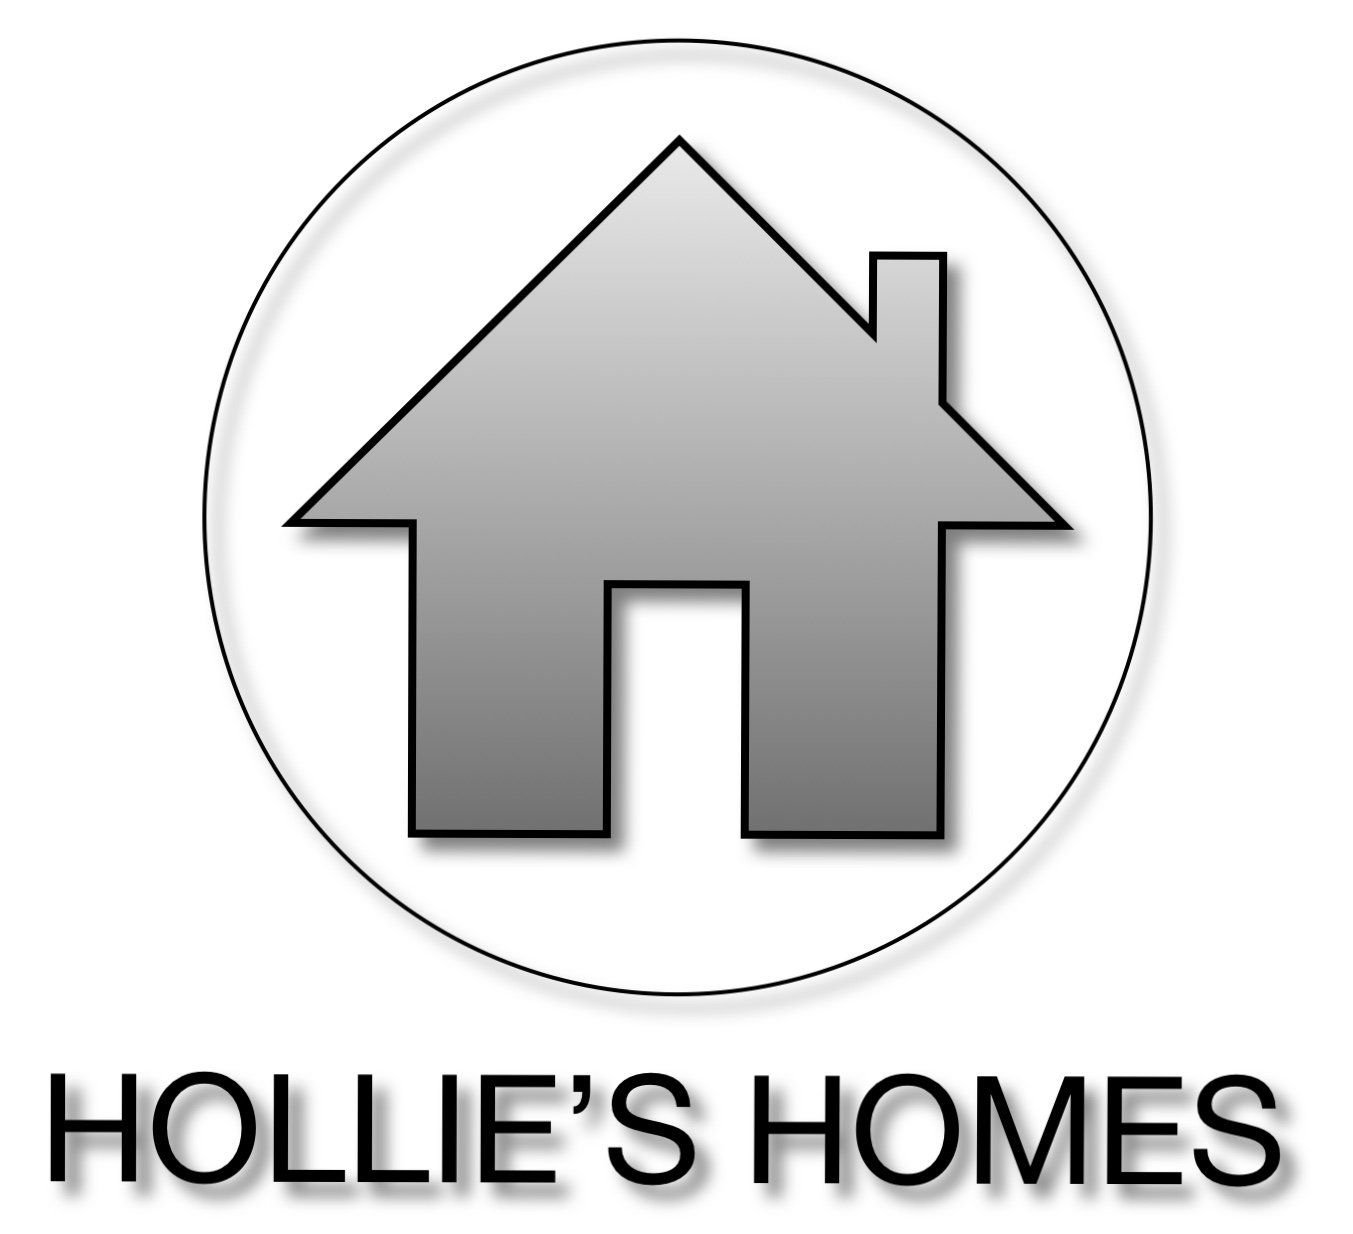 (c) Hollieshomes.co.uk